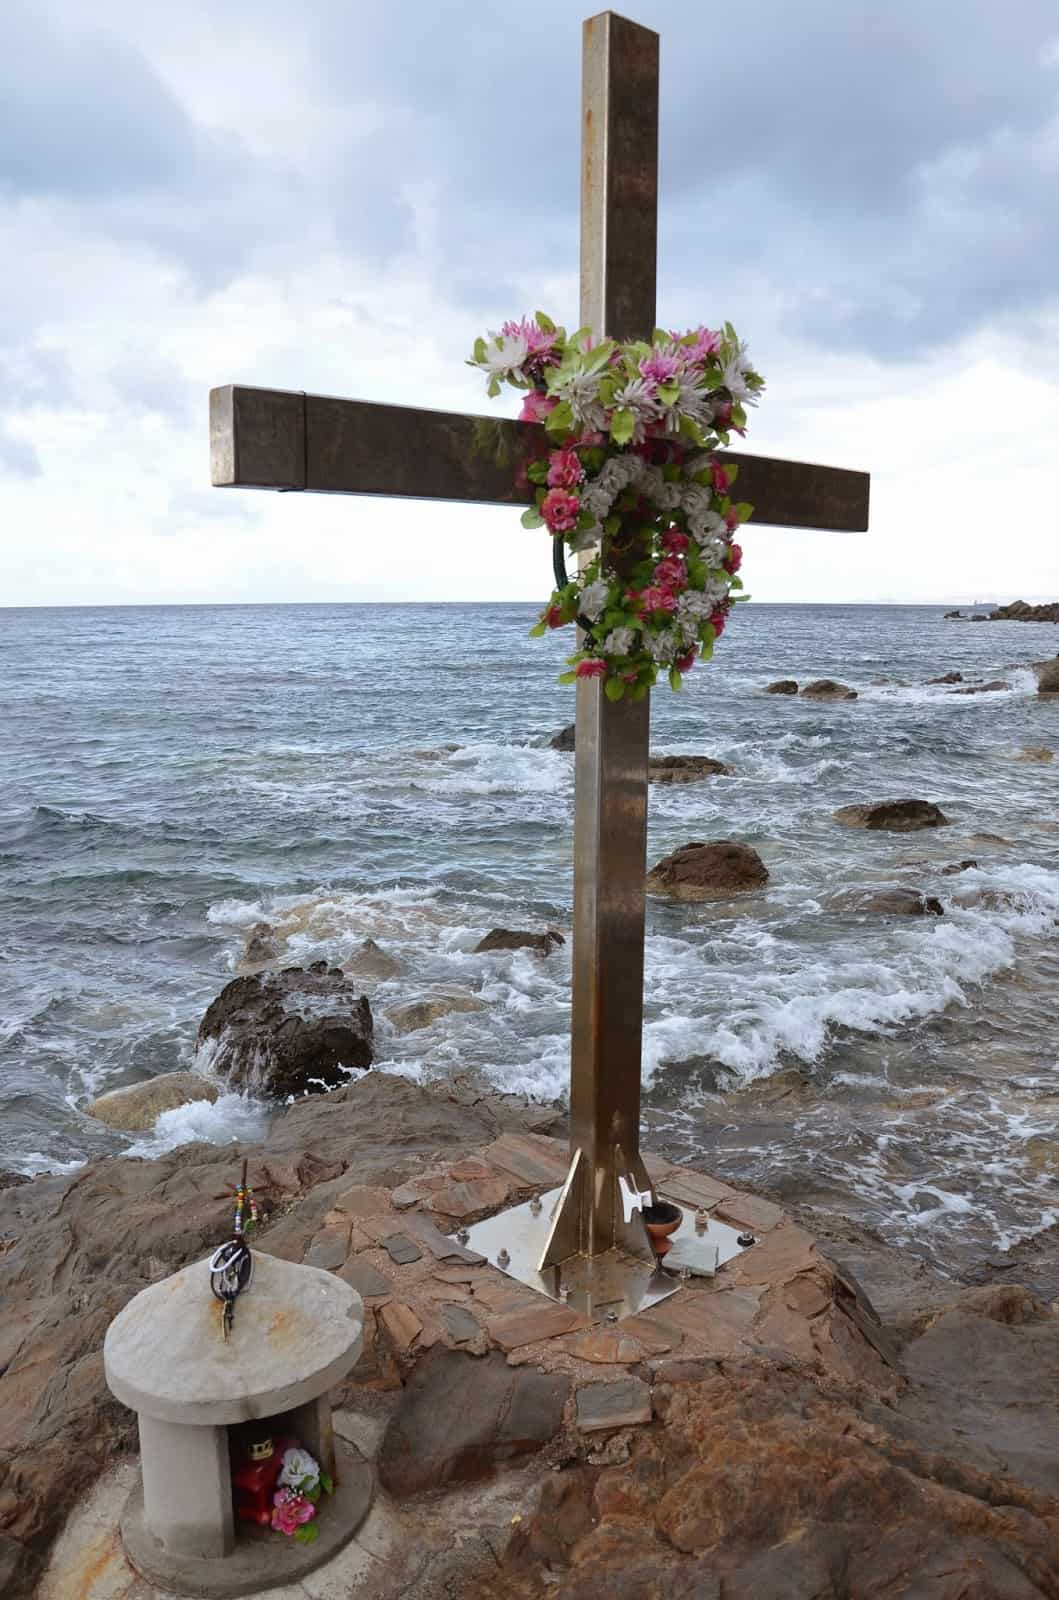 St. Markella martyrdom site in Chios, Greece